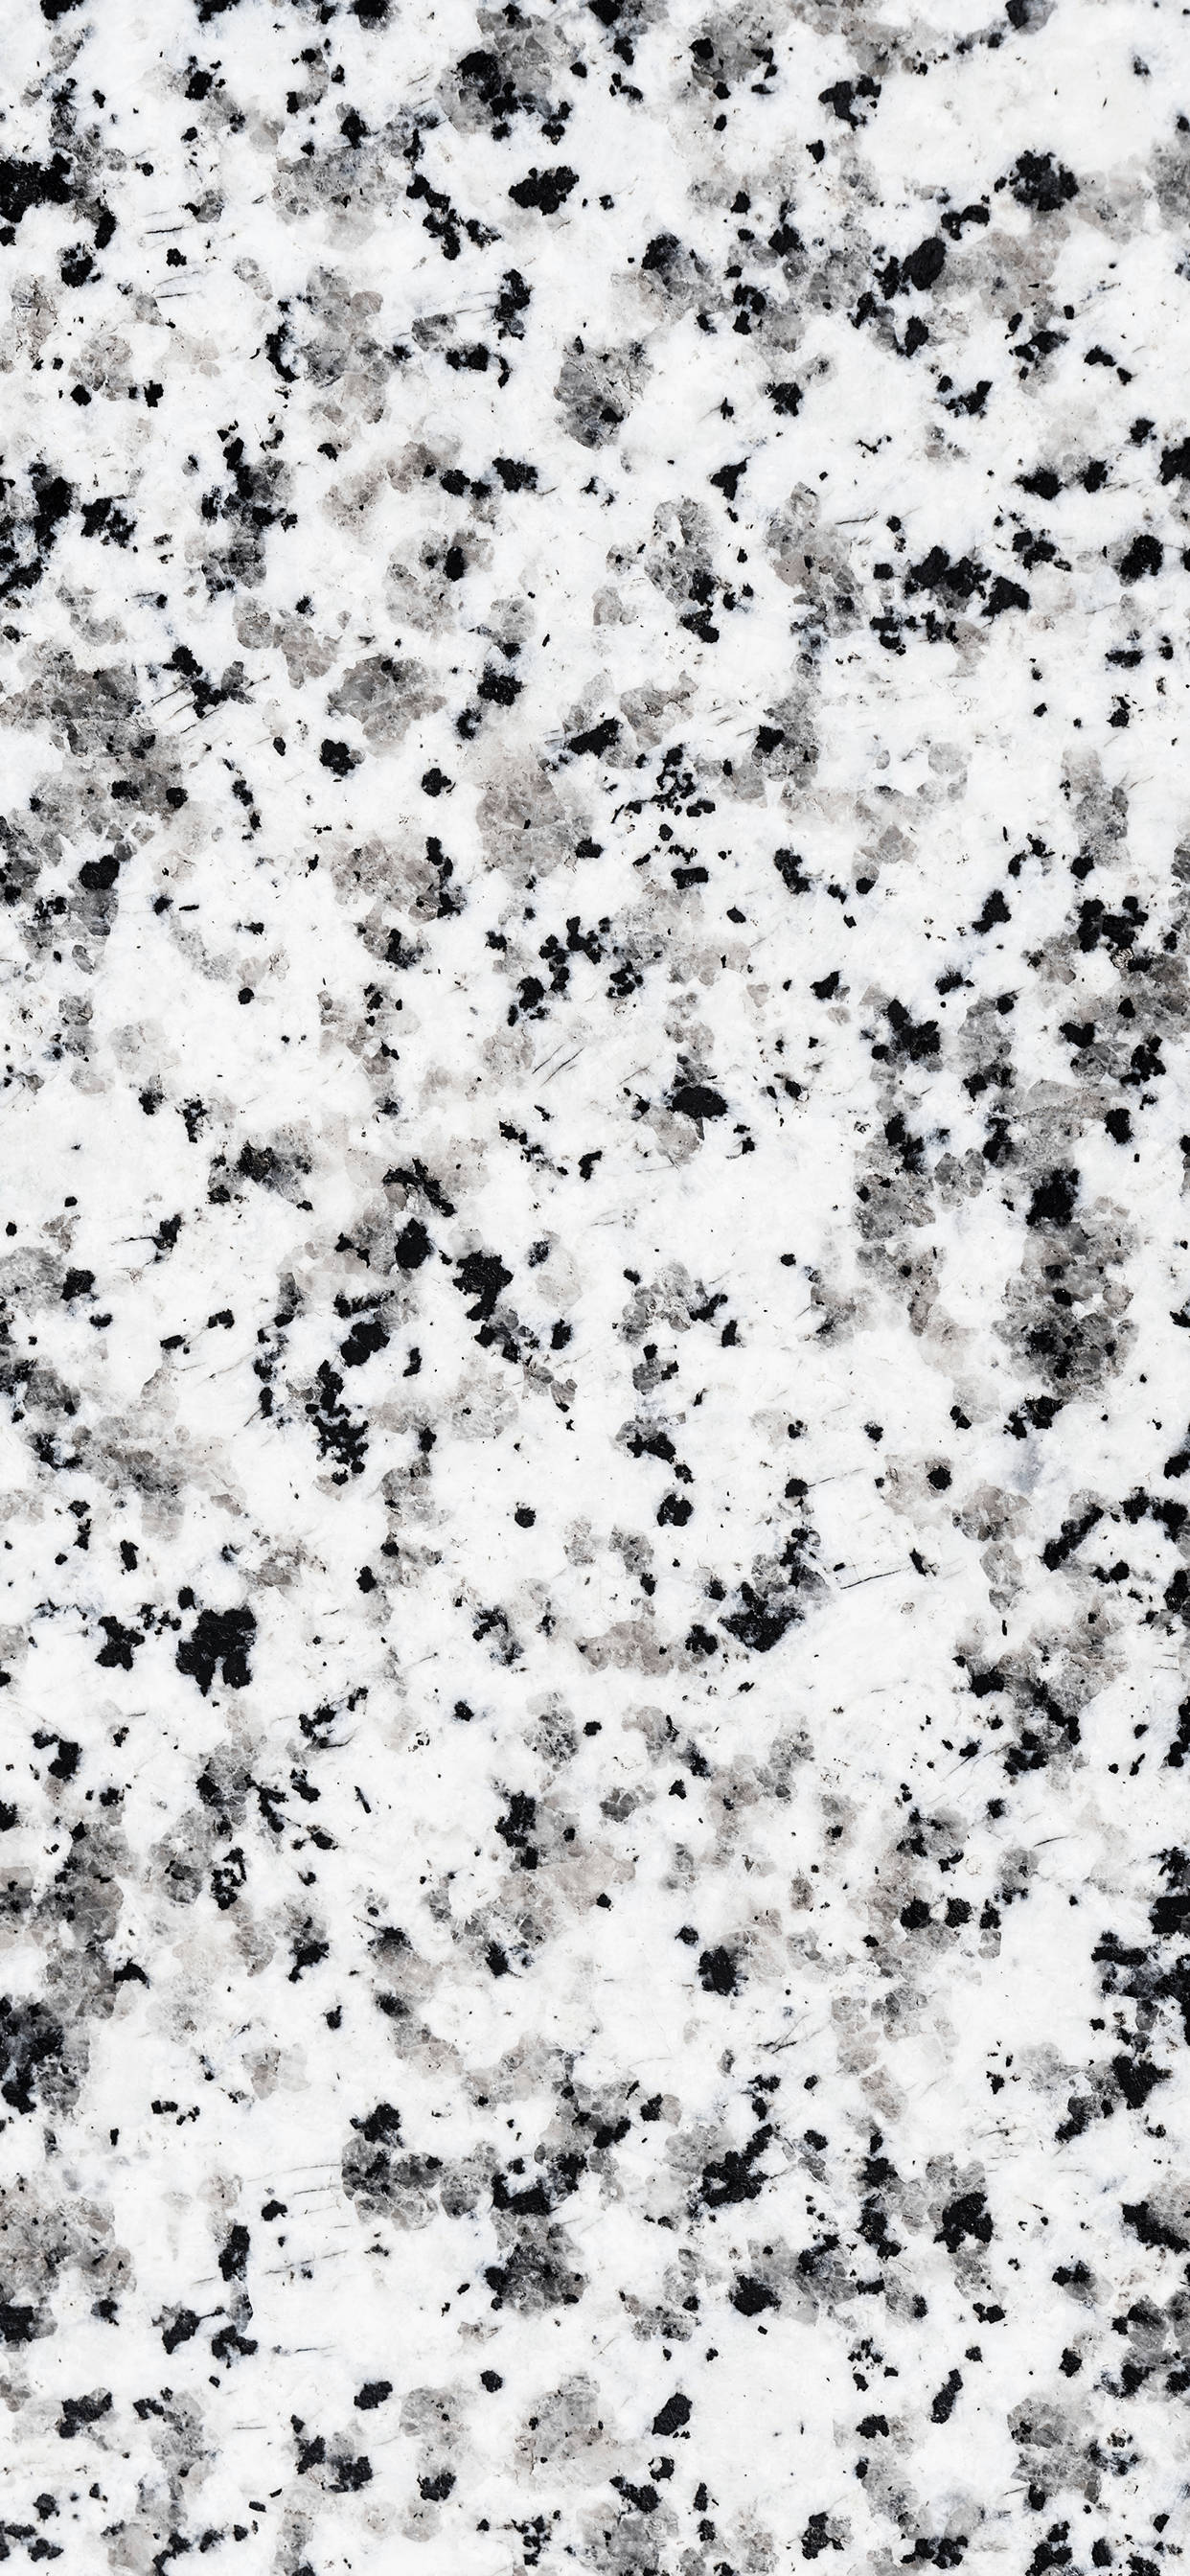 Dalmatian Black White Marble Iphone Wallpaper